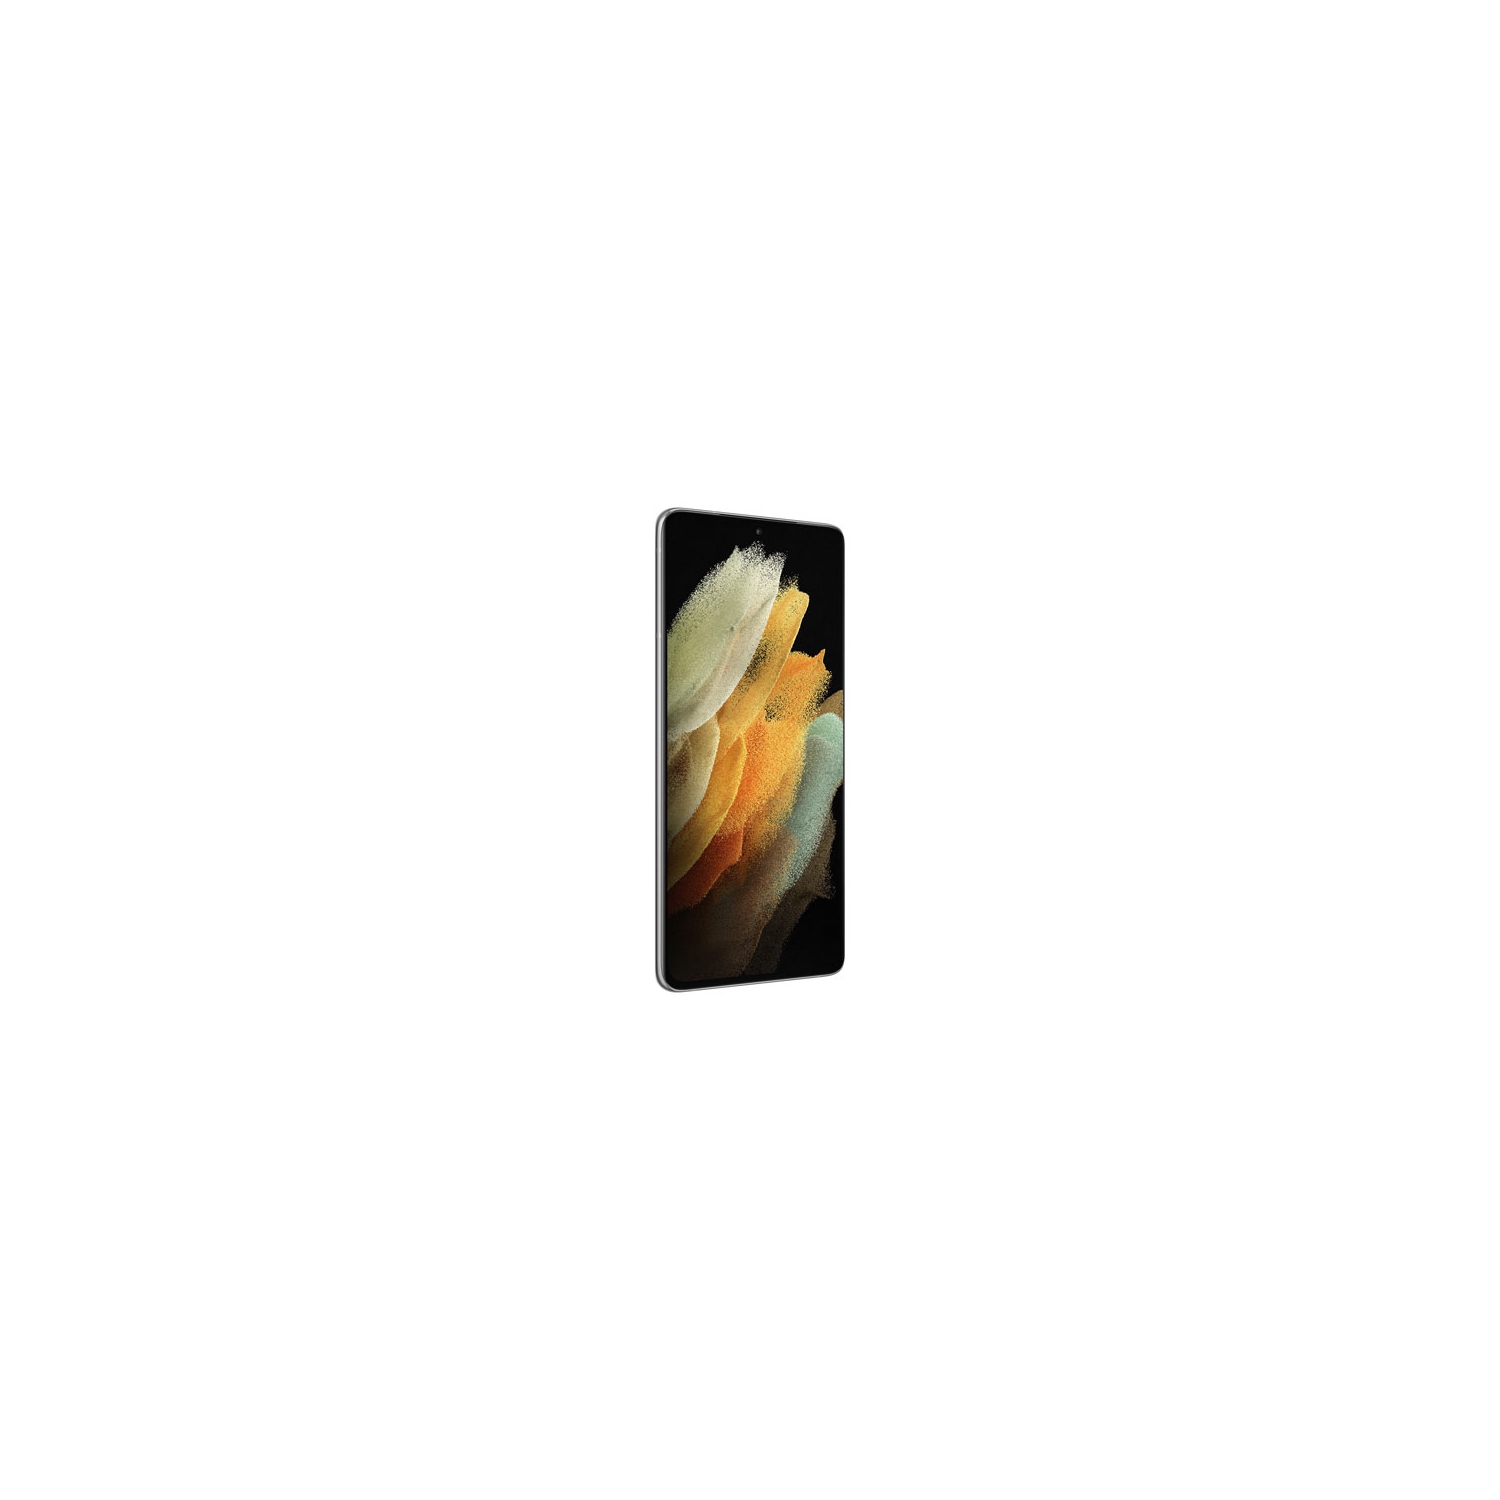 Refurbished (Good) - Samsung Galaxy S21 Ultra 5G 256GB - Phantom Silver - Unlocked